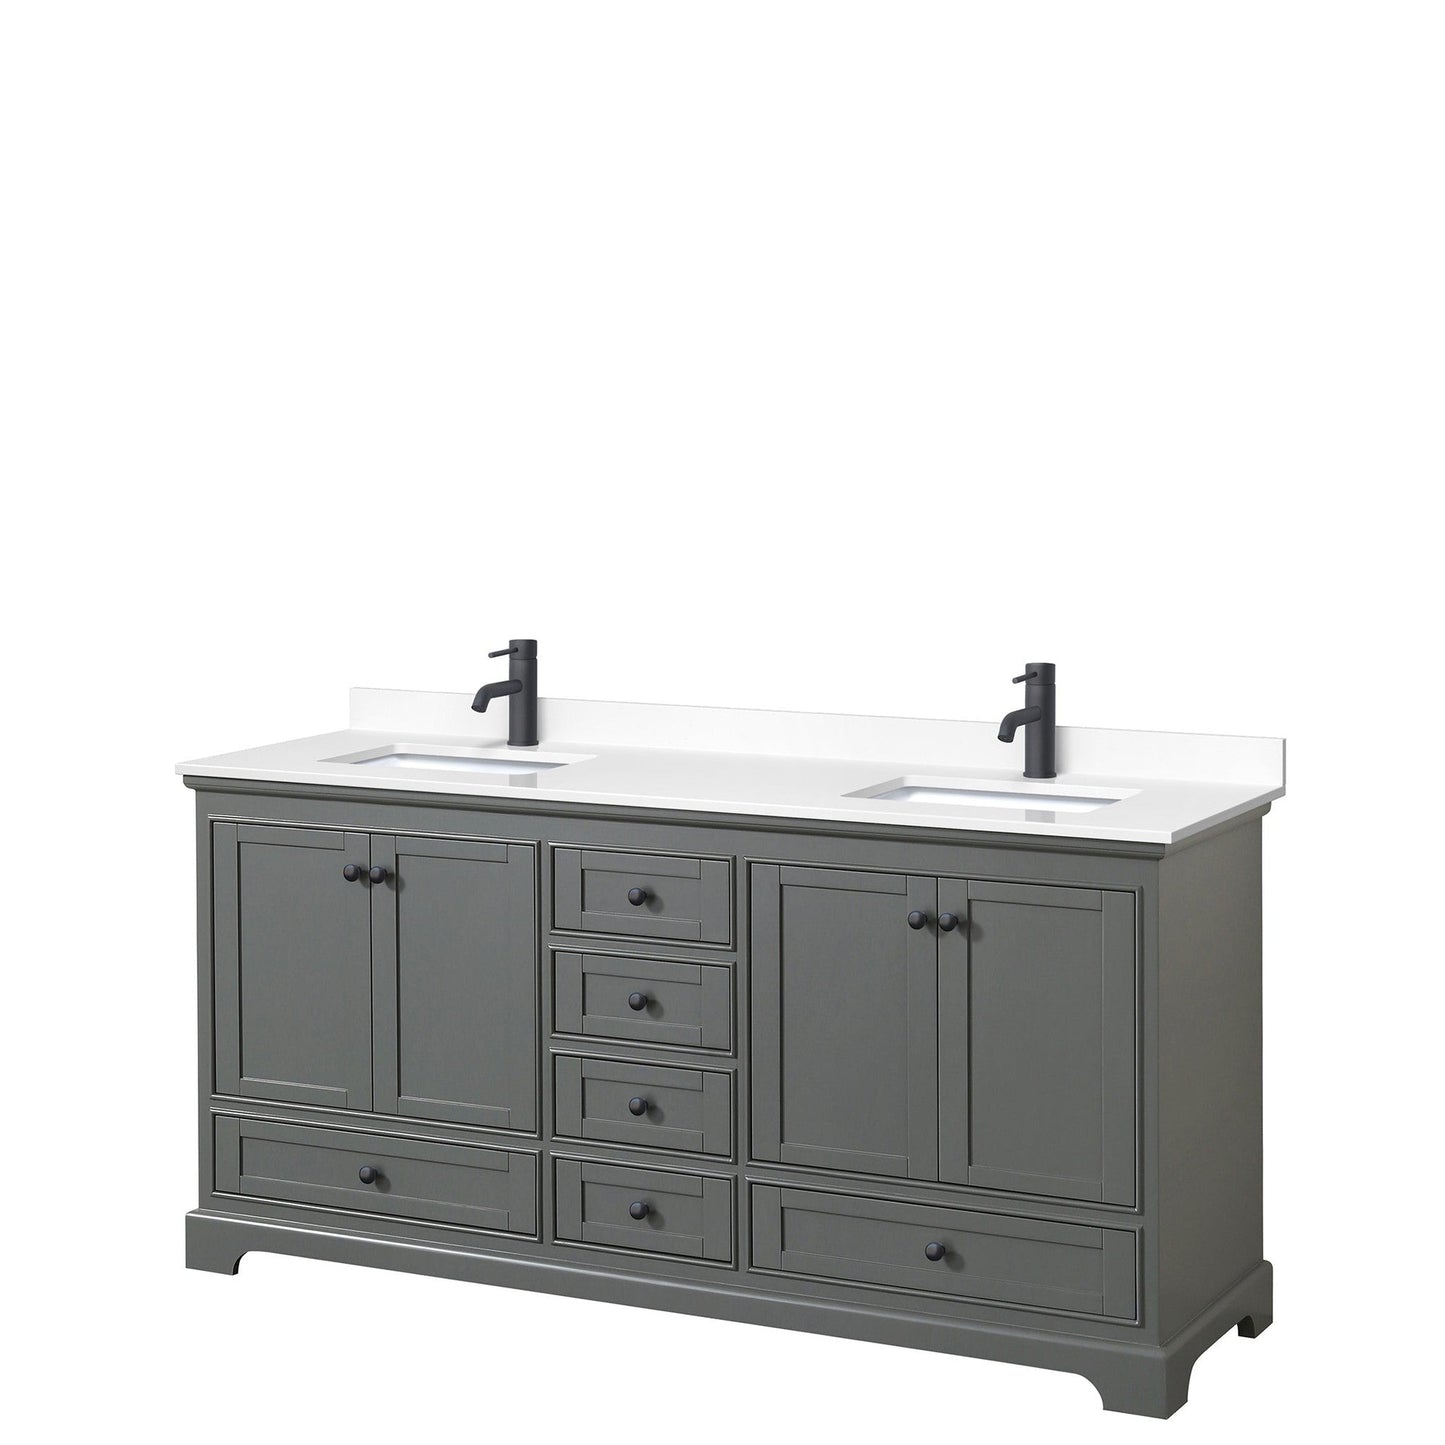 Deborah 72" Double Bathroom Vanity in Dark Gray, White Cultured Marble Countertop, Undermount Square Sinks, Matte Black Trim